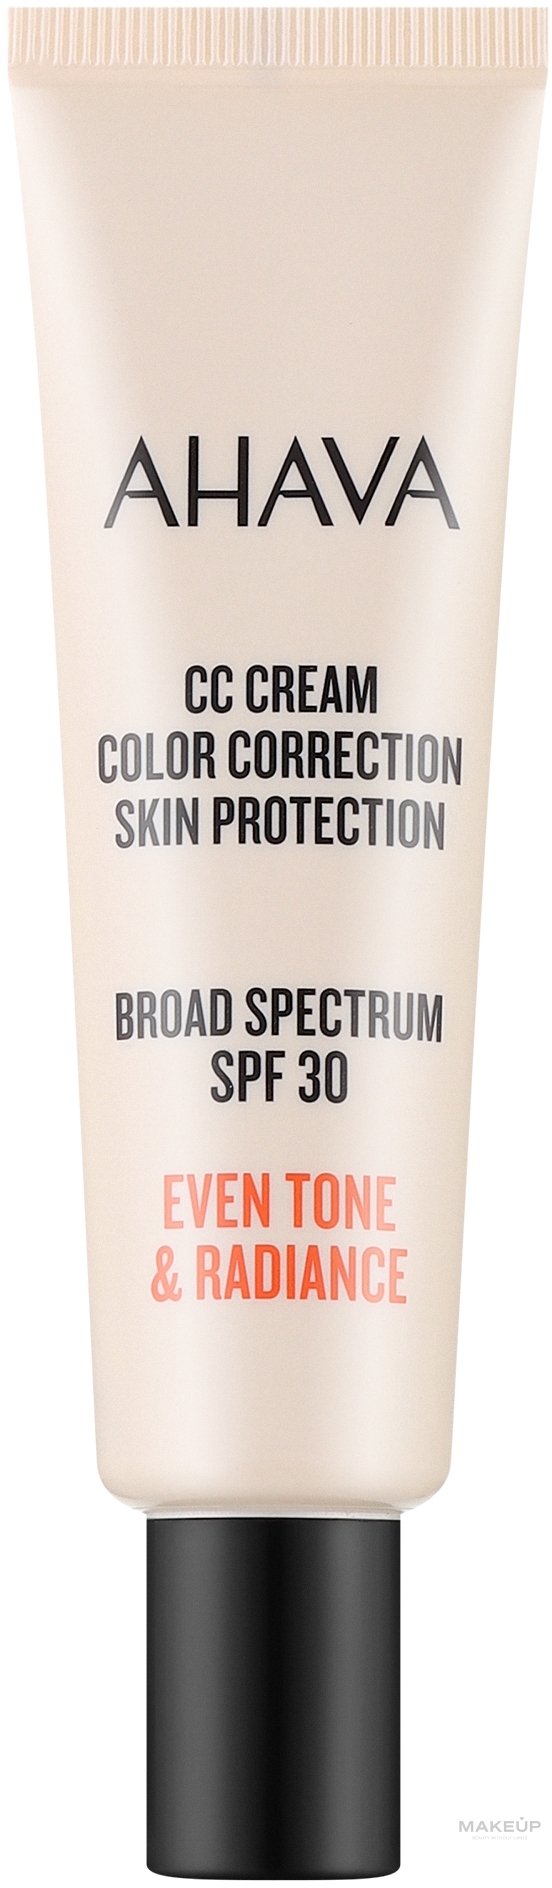 CC-Creme für das Gesicht - Ahava CC Cream Color Correction Skin Protection SPF 30 — Bild 30 ml